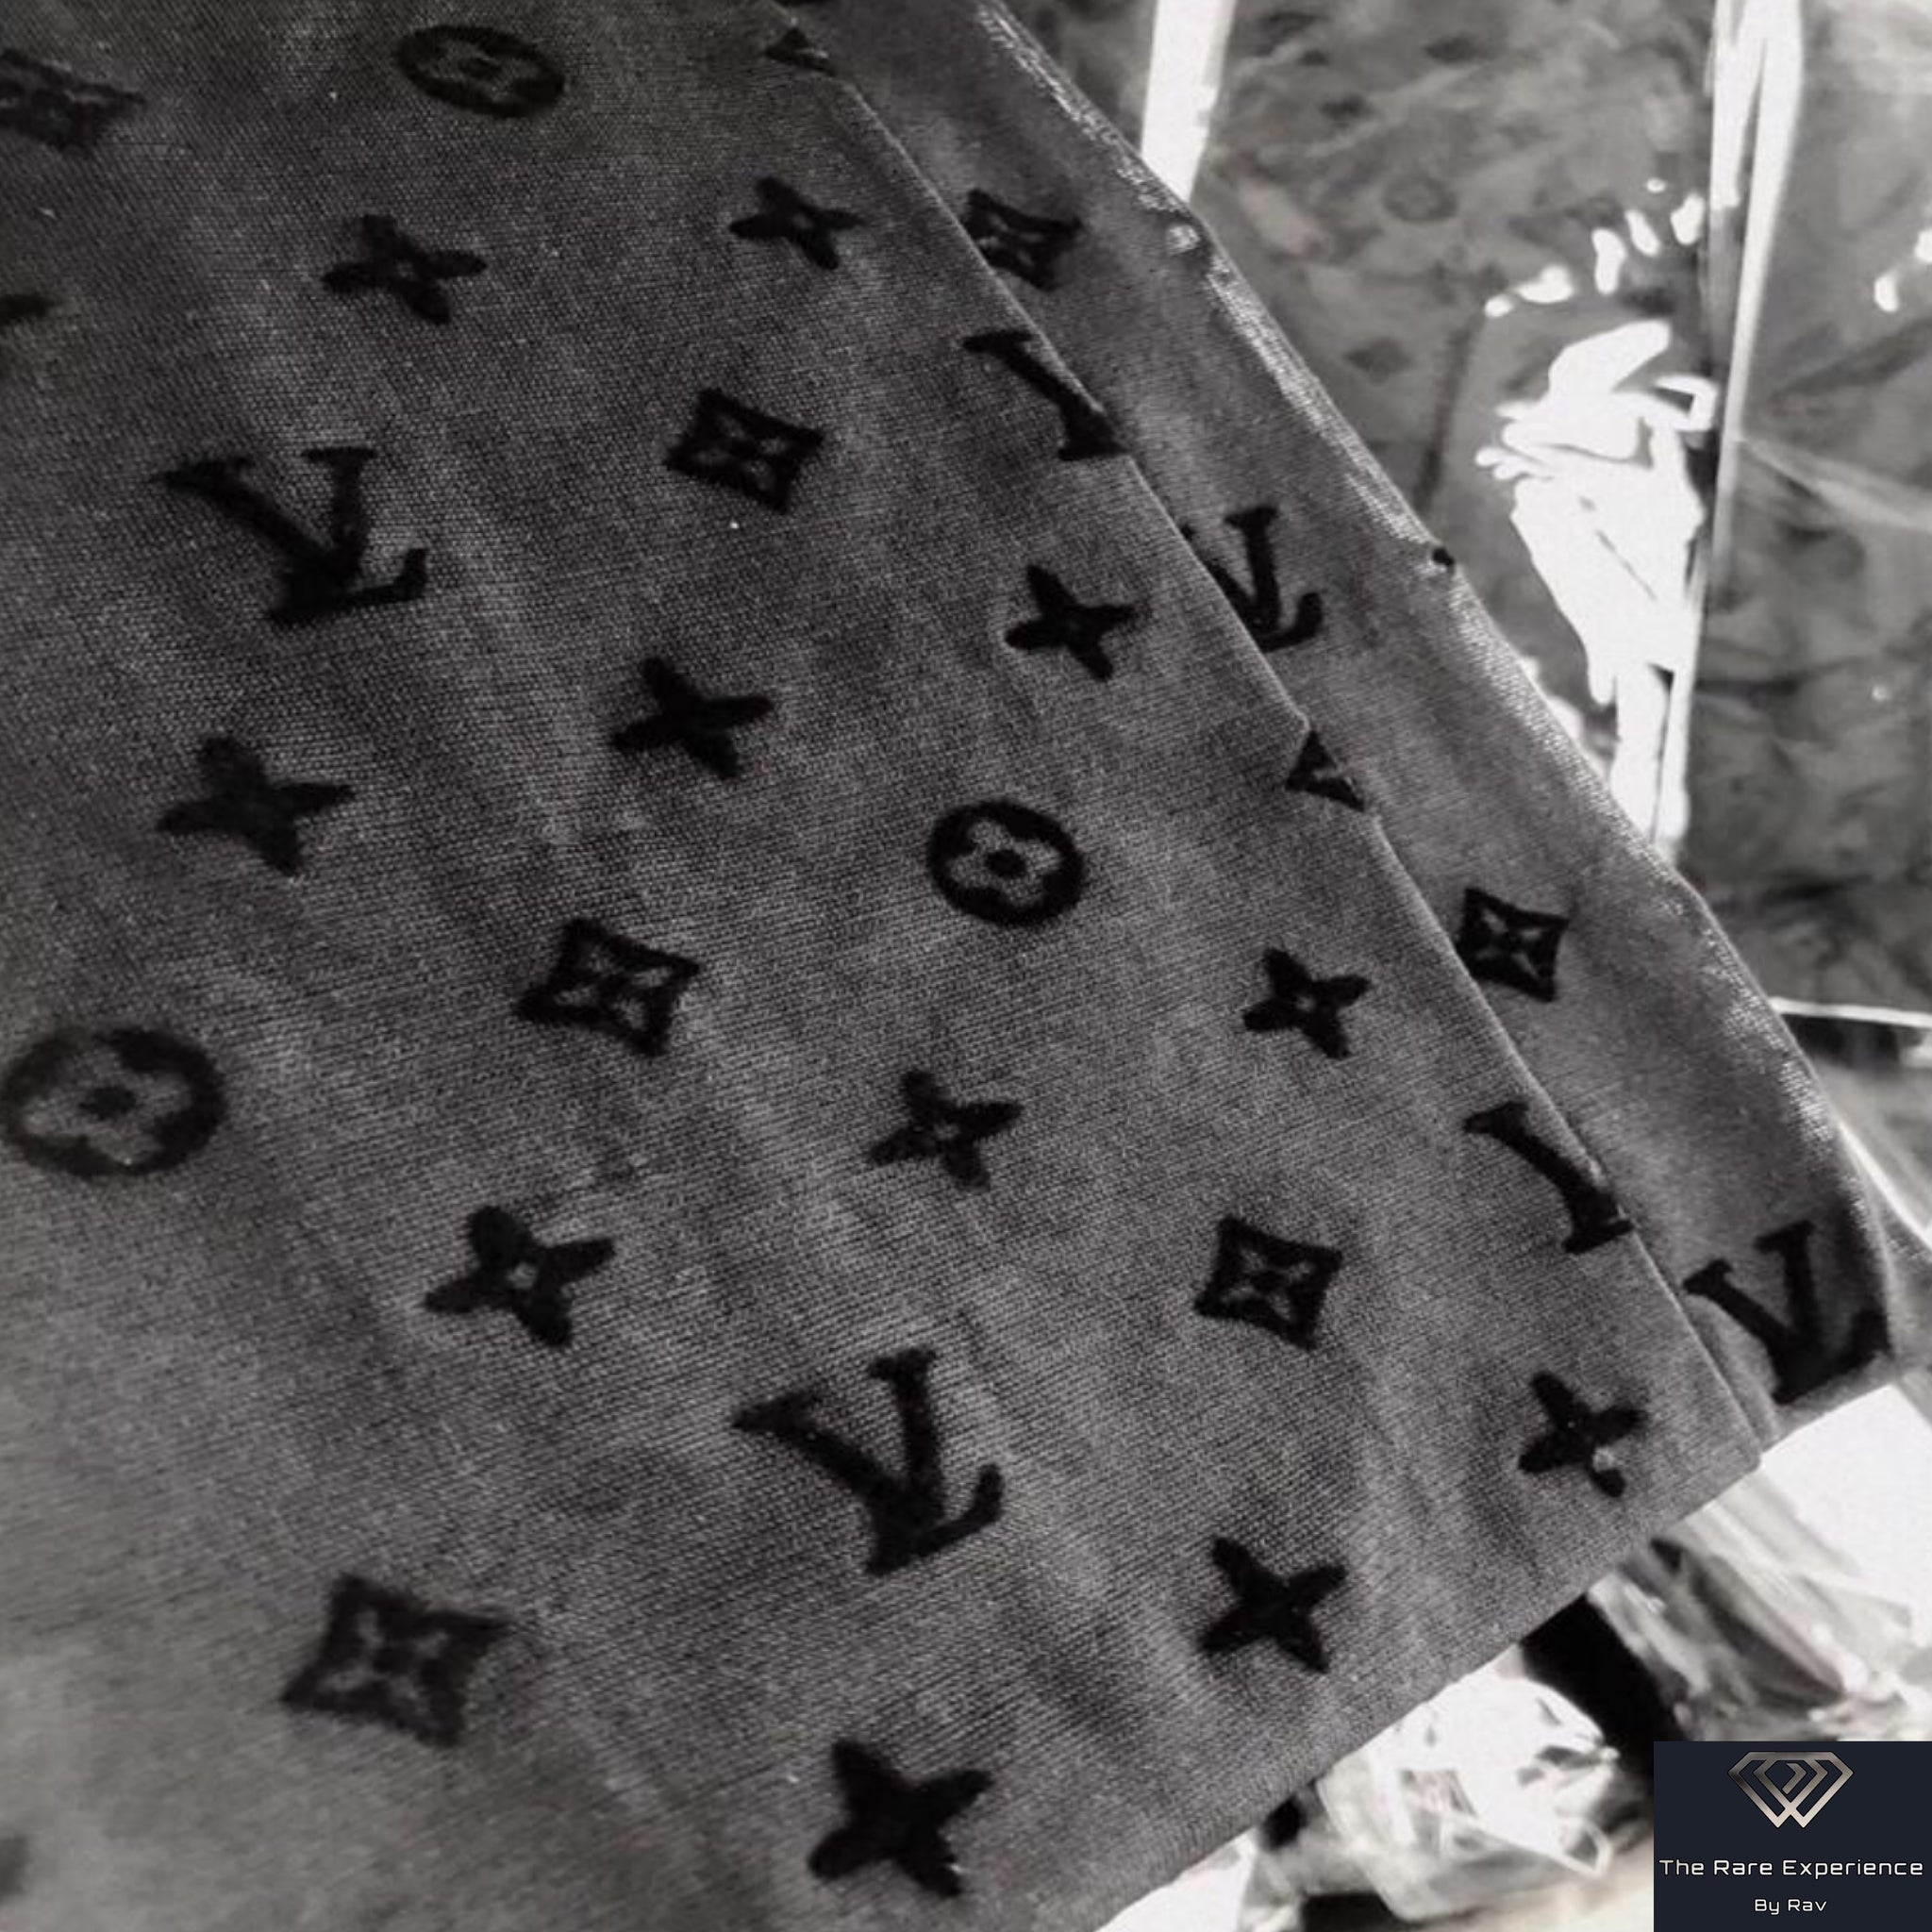 Black Louis Vuitton Stockings –